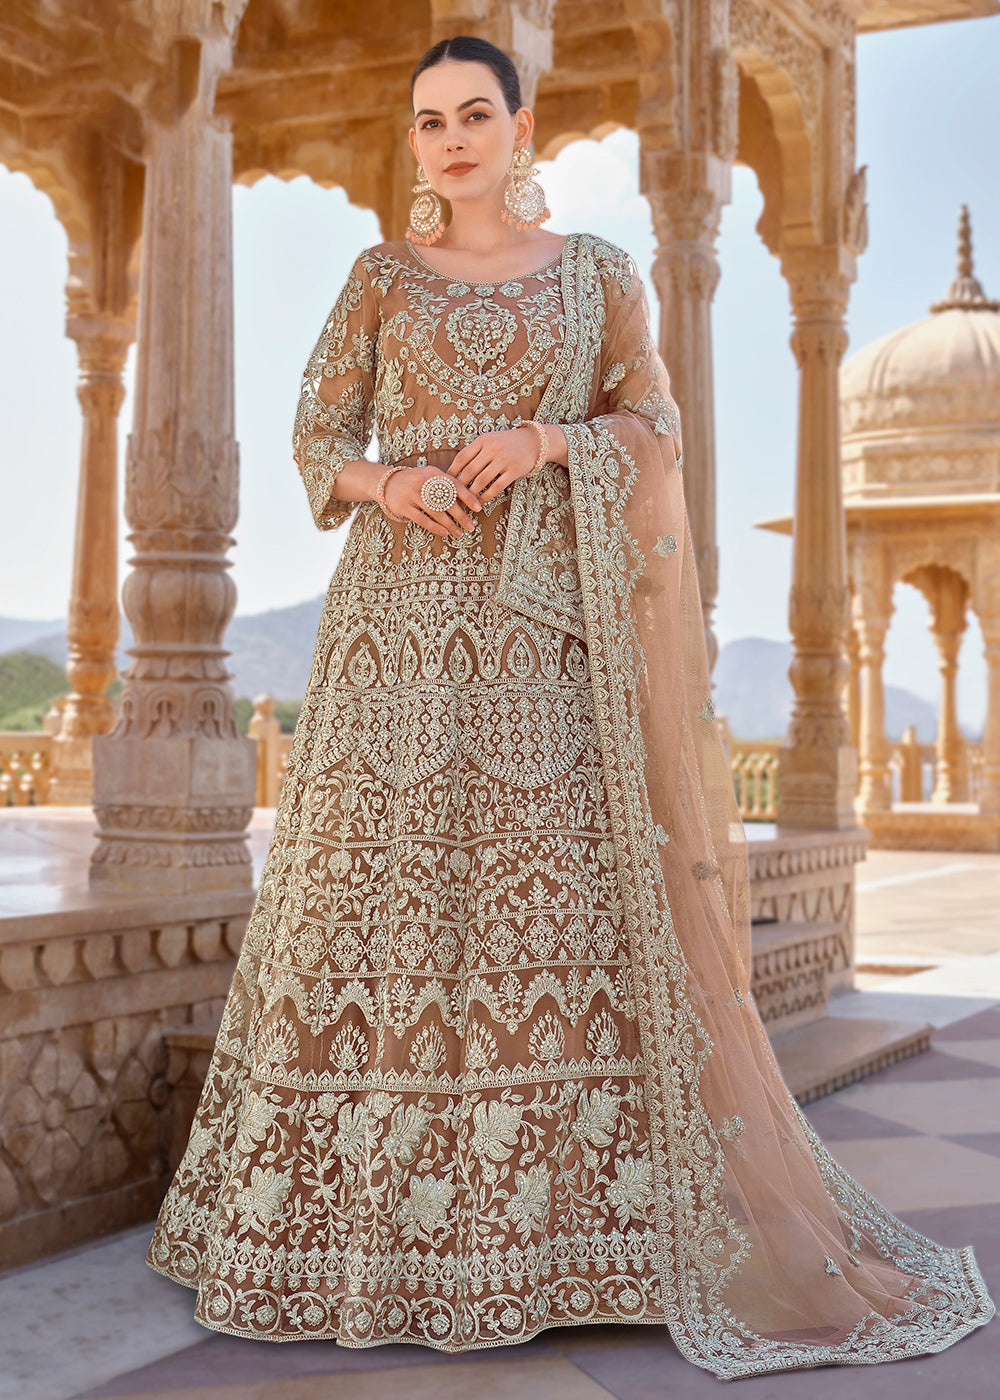 Morpeach Colour Bhagalpuri Silk Wedding Lehenga Choli Buy this outfit and  Make your occassion very spec… | Lehenga style saree, Indian dresses,  Indian lehenga choli